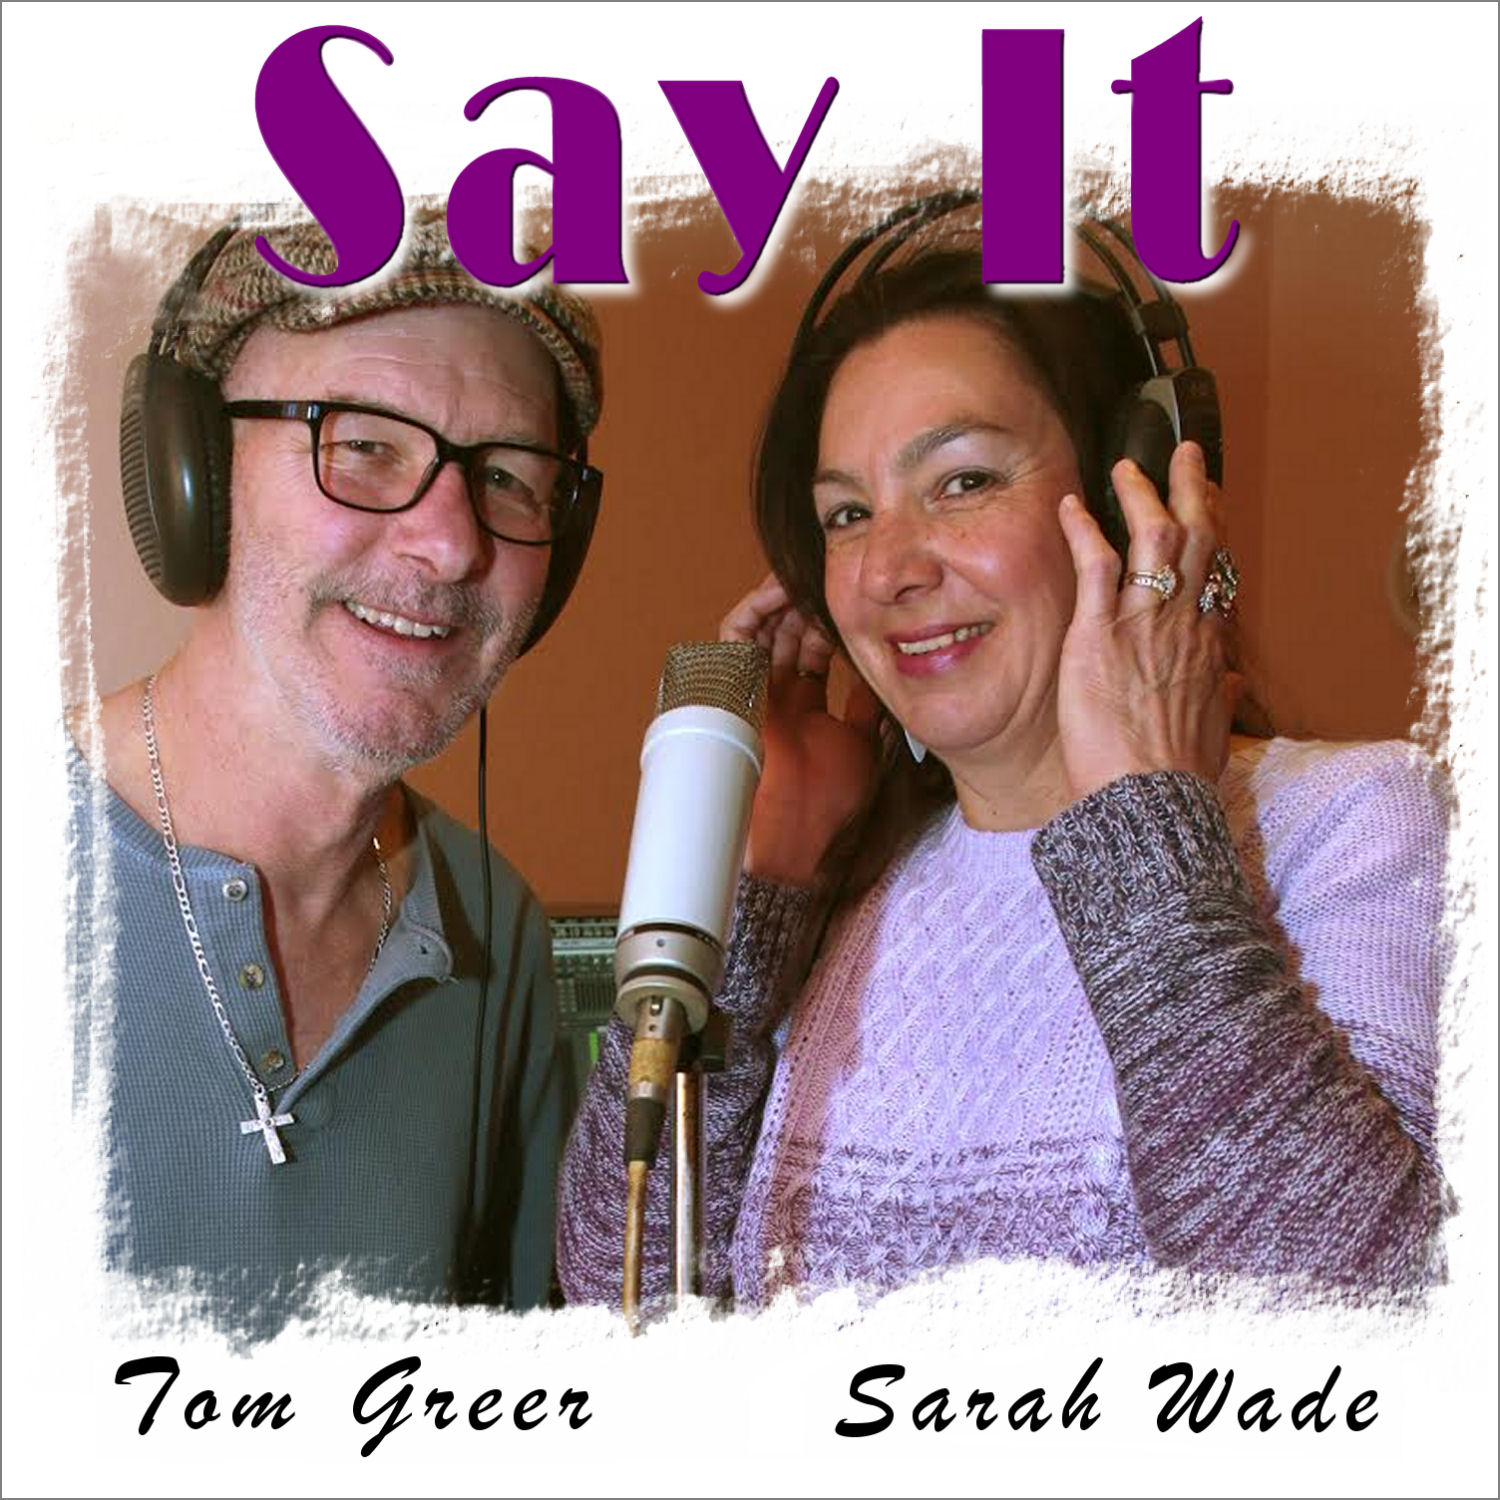  Tom Greer – “Say It” Featuring Sarah Wade